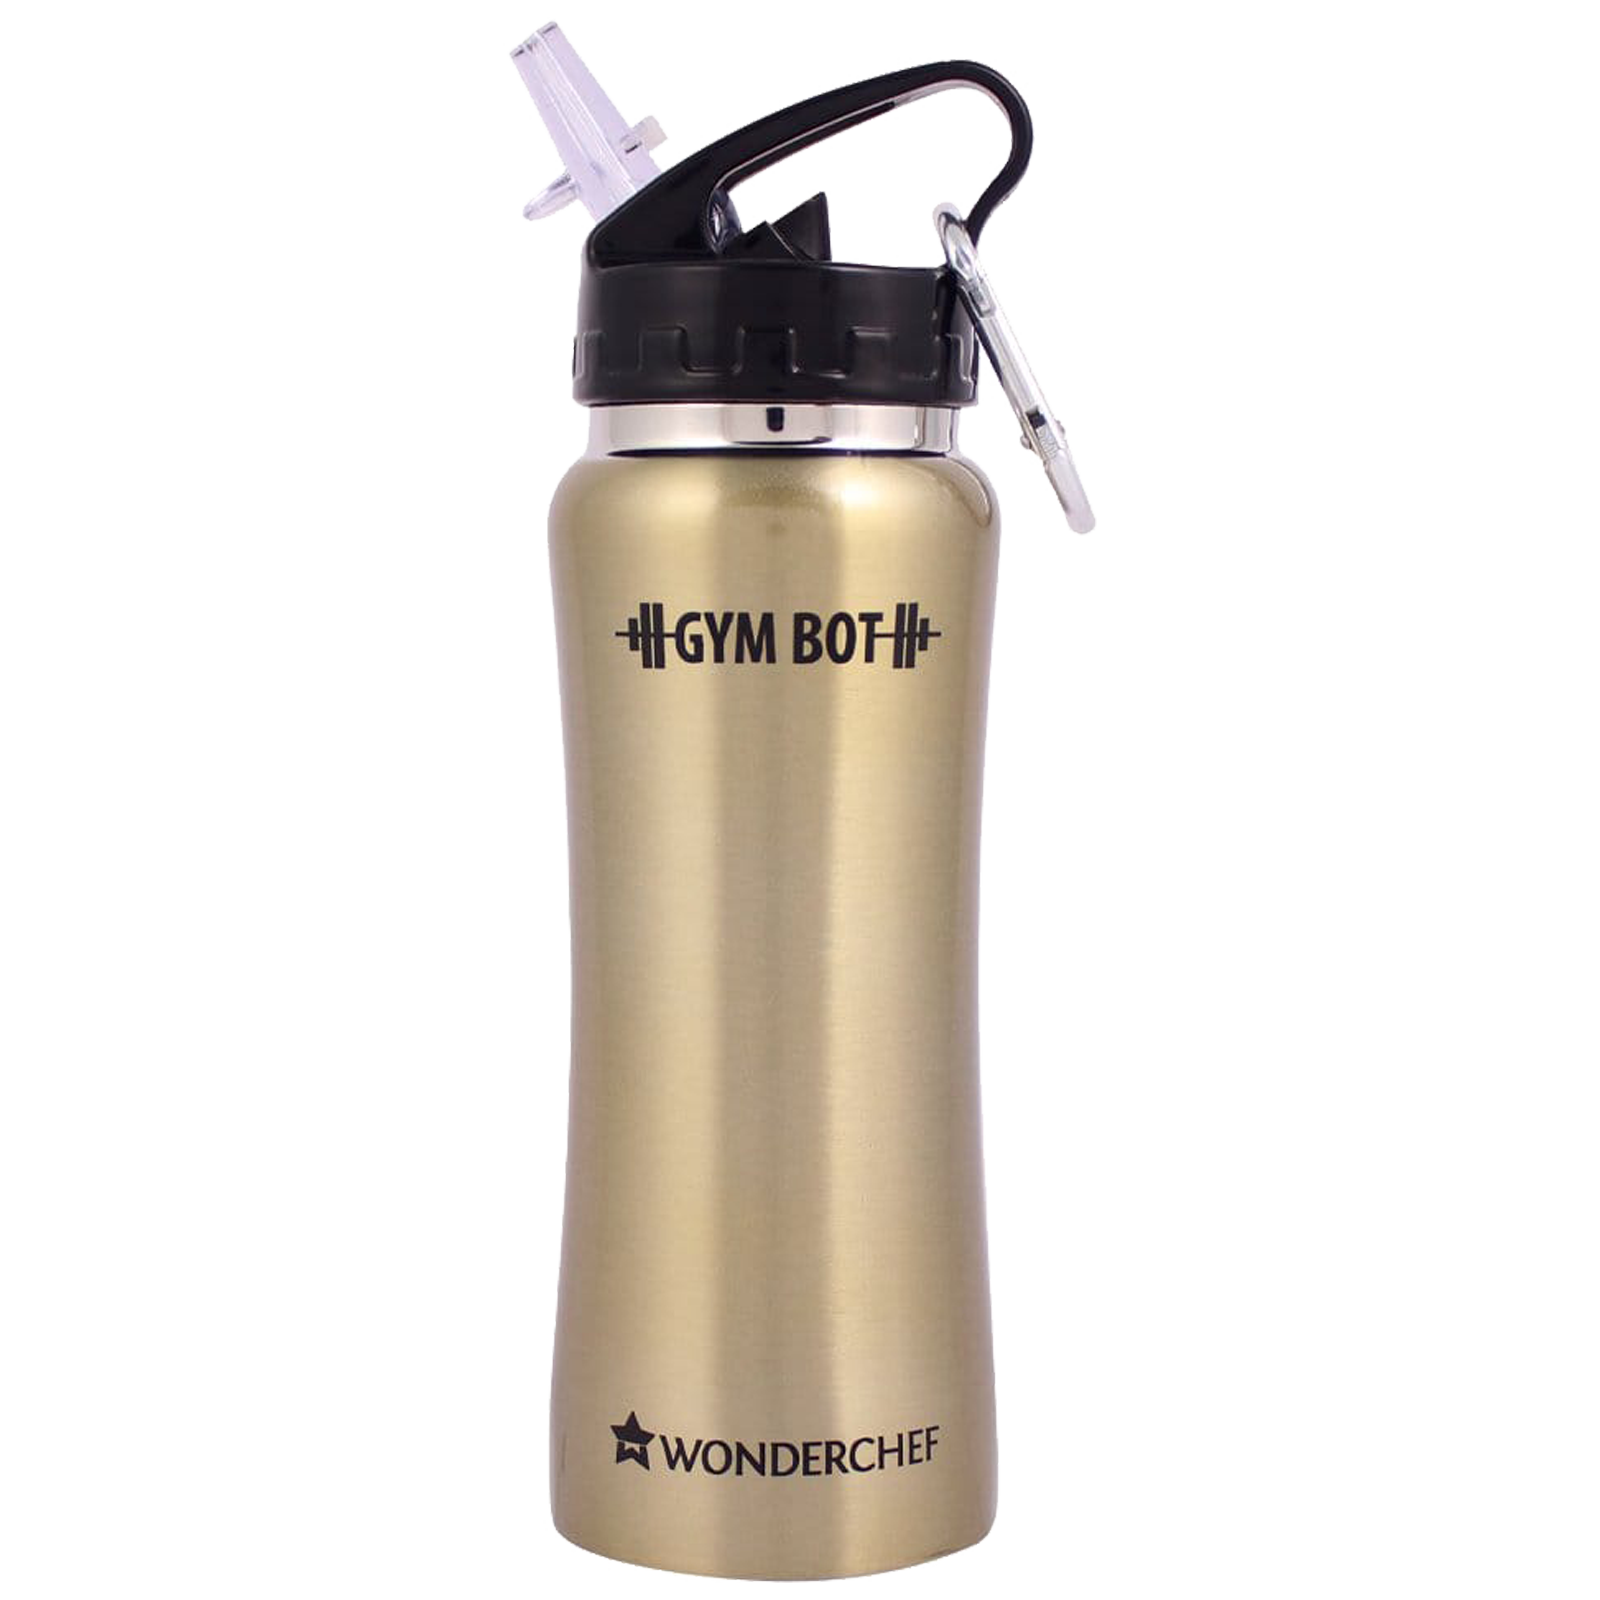 wonderchef - wonderchef Gym-Bot 0.5 Litres Stainless Steel Water Bottle (Spill and Leak Proof, 63153150, Gold)